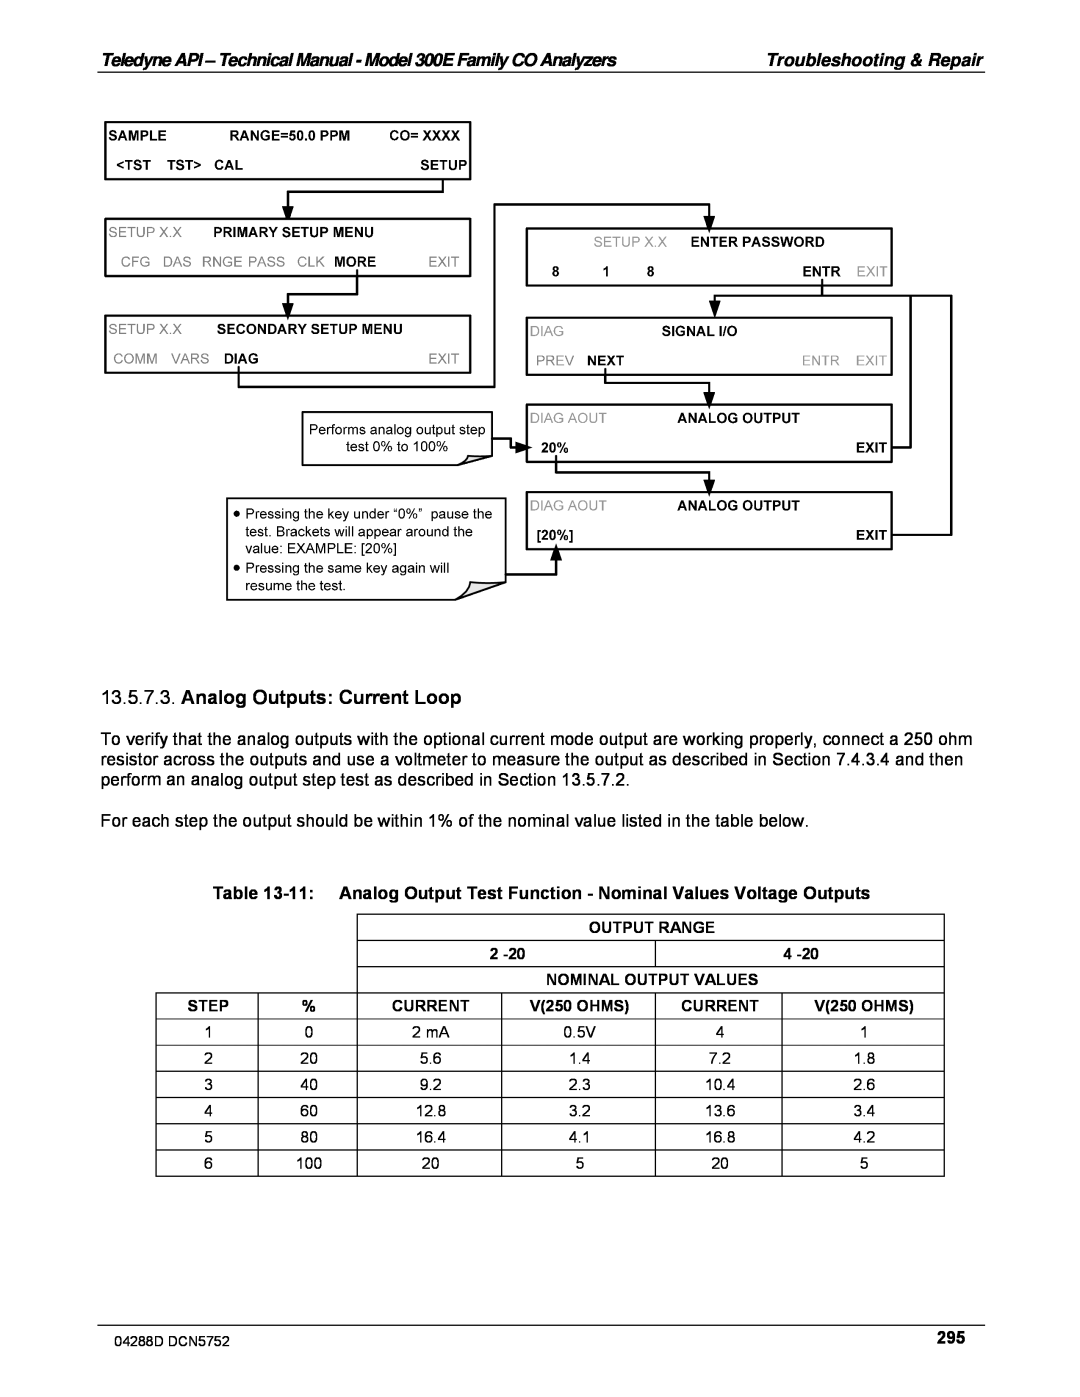 Teledyne M300EM operation manual Analog Outputs: Current Loop 